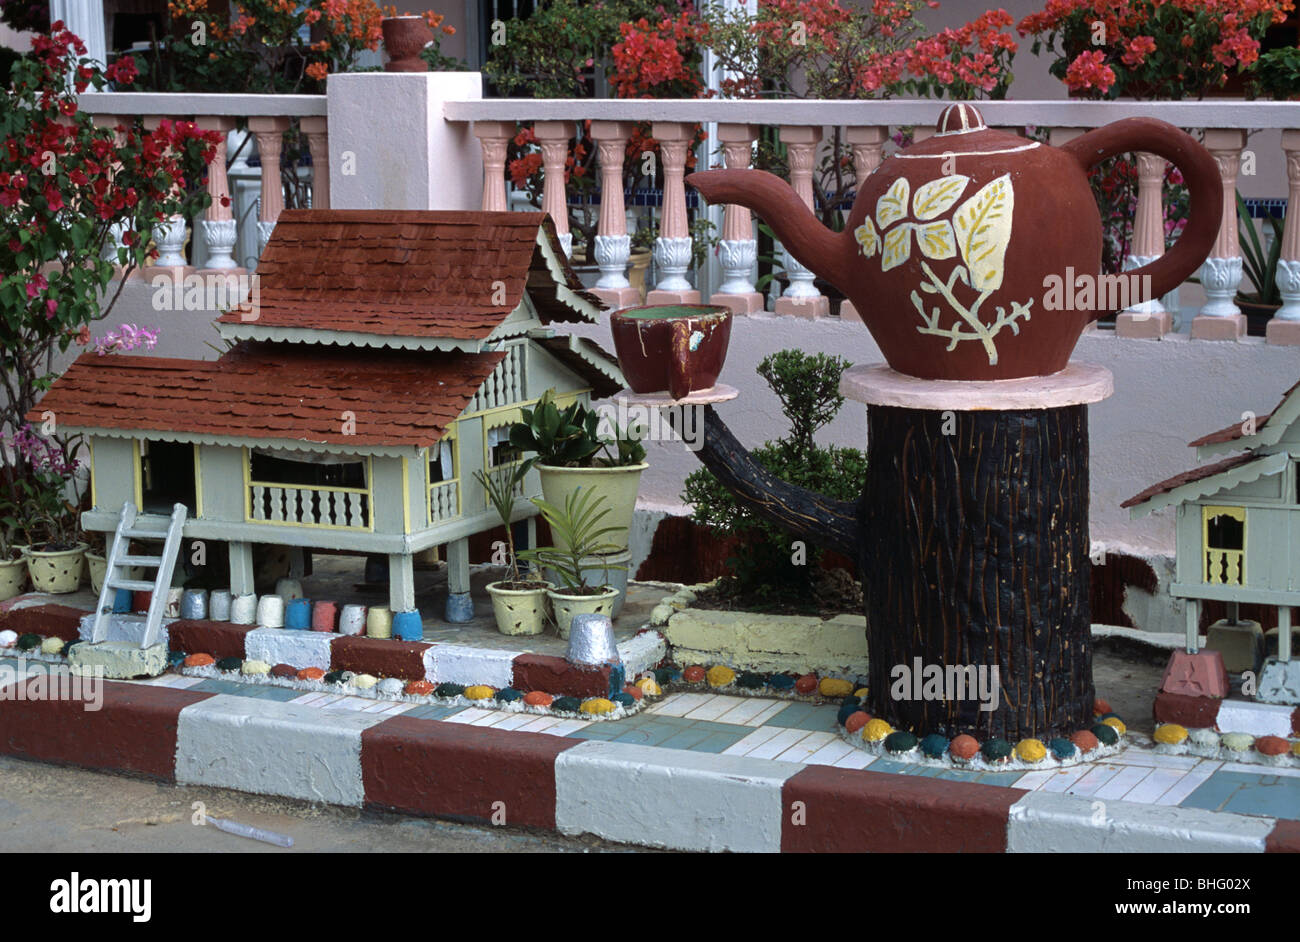 Malaysisches Miniaturmodell als Street Art, Straßenkunst oder Volkskunst außerhalb von Malay Melaka oder Malacca House, Morten Village, Malacca City, Malaysia Stockfoto